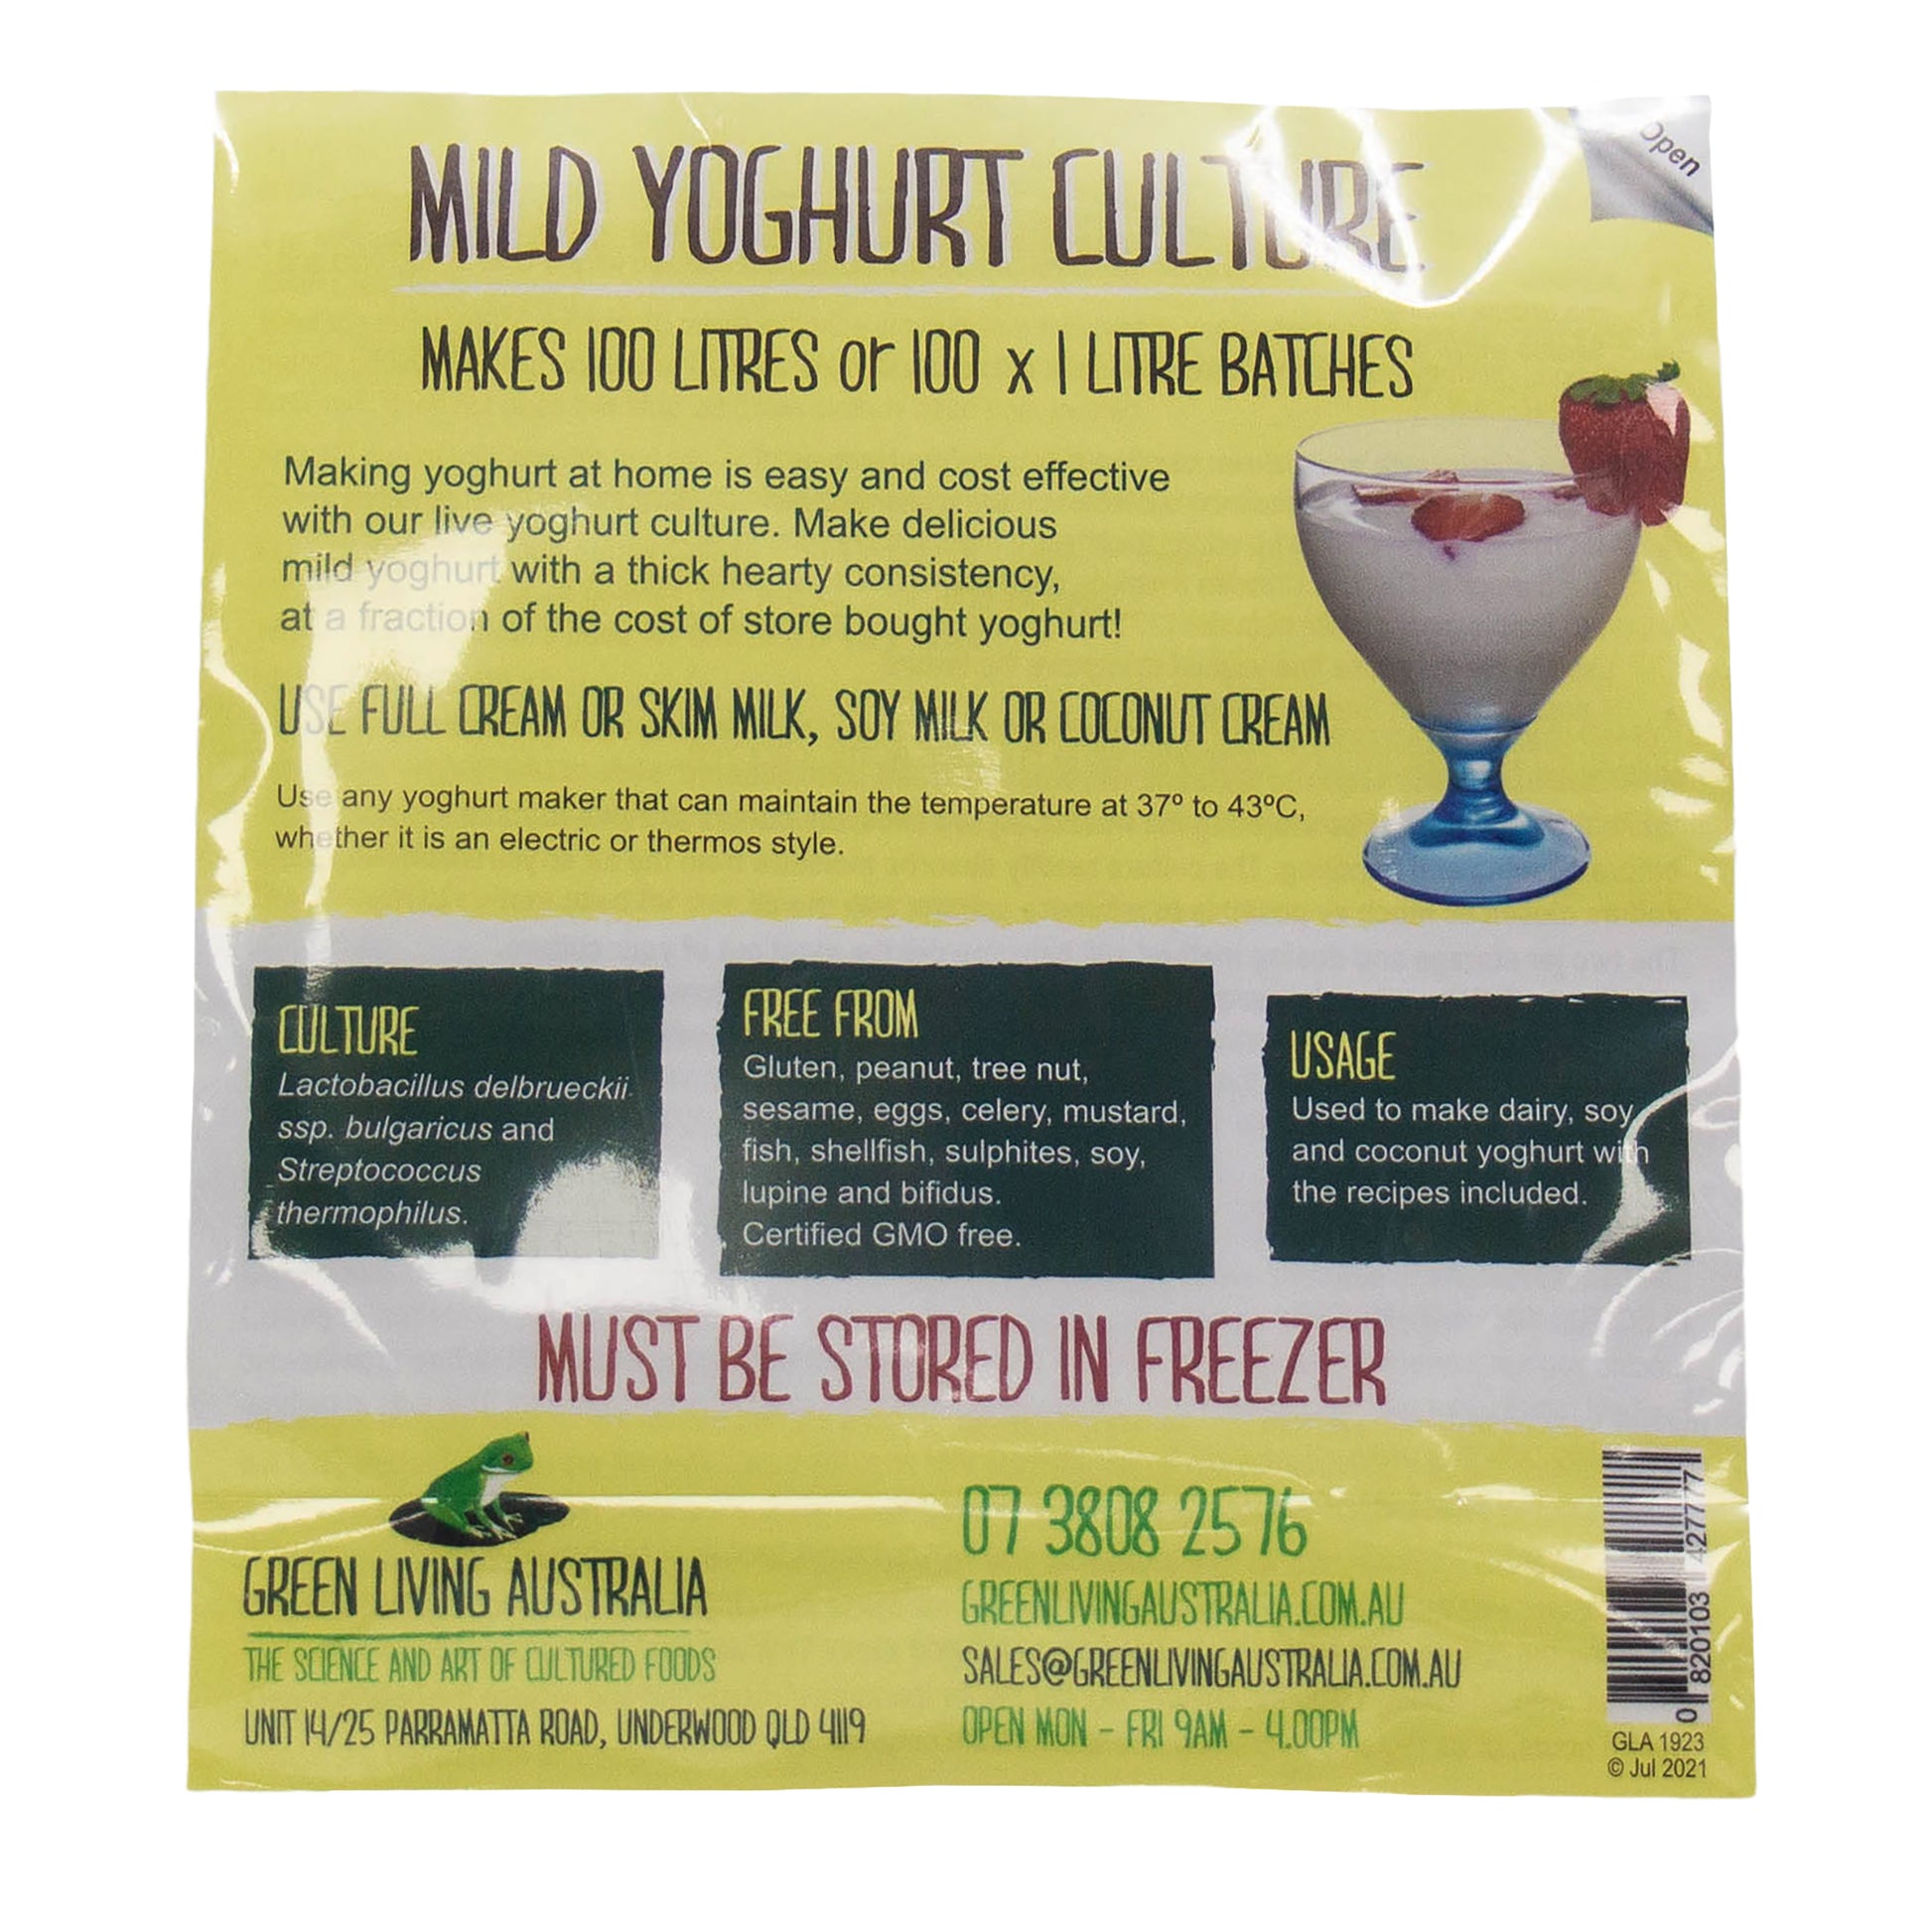 mild yoghurt culture for making 100 litres of mild yoghurt. Use full cream or skim milk, soy milk or coconut cream. 